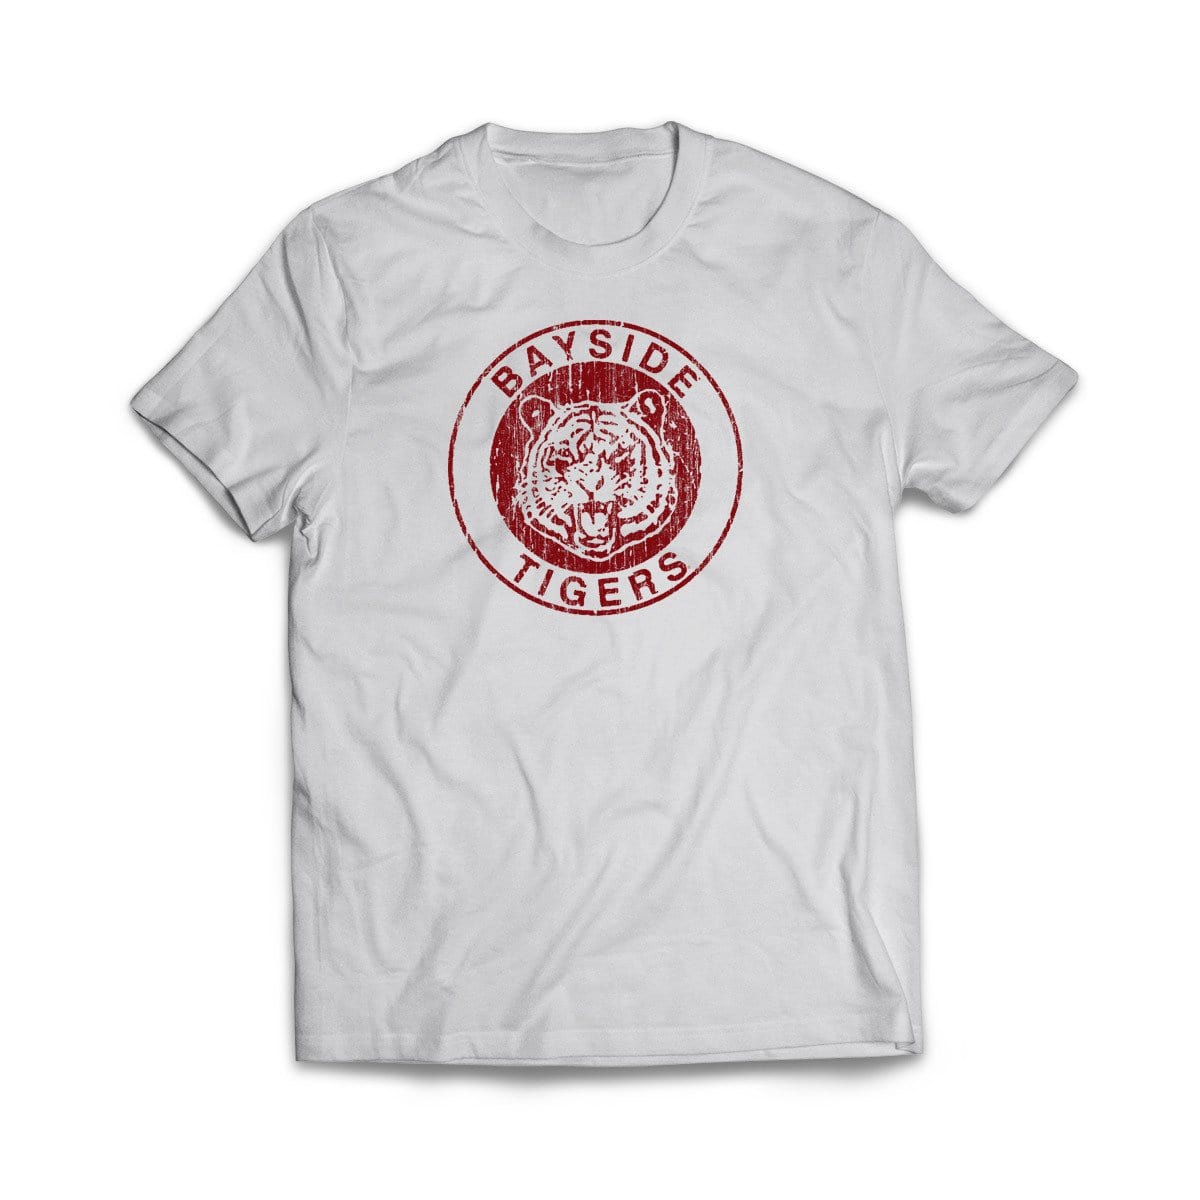 Bayside Tigers White T-Shirt - We Got Teez